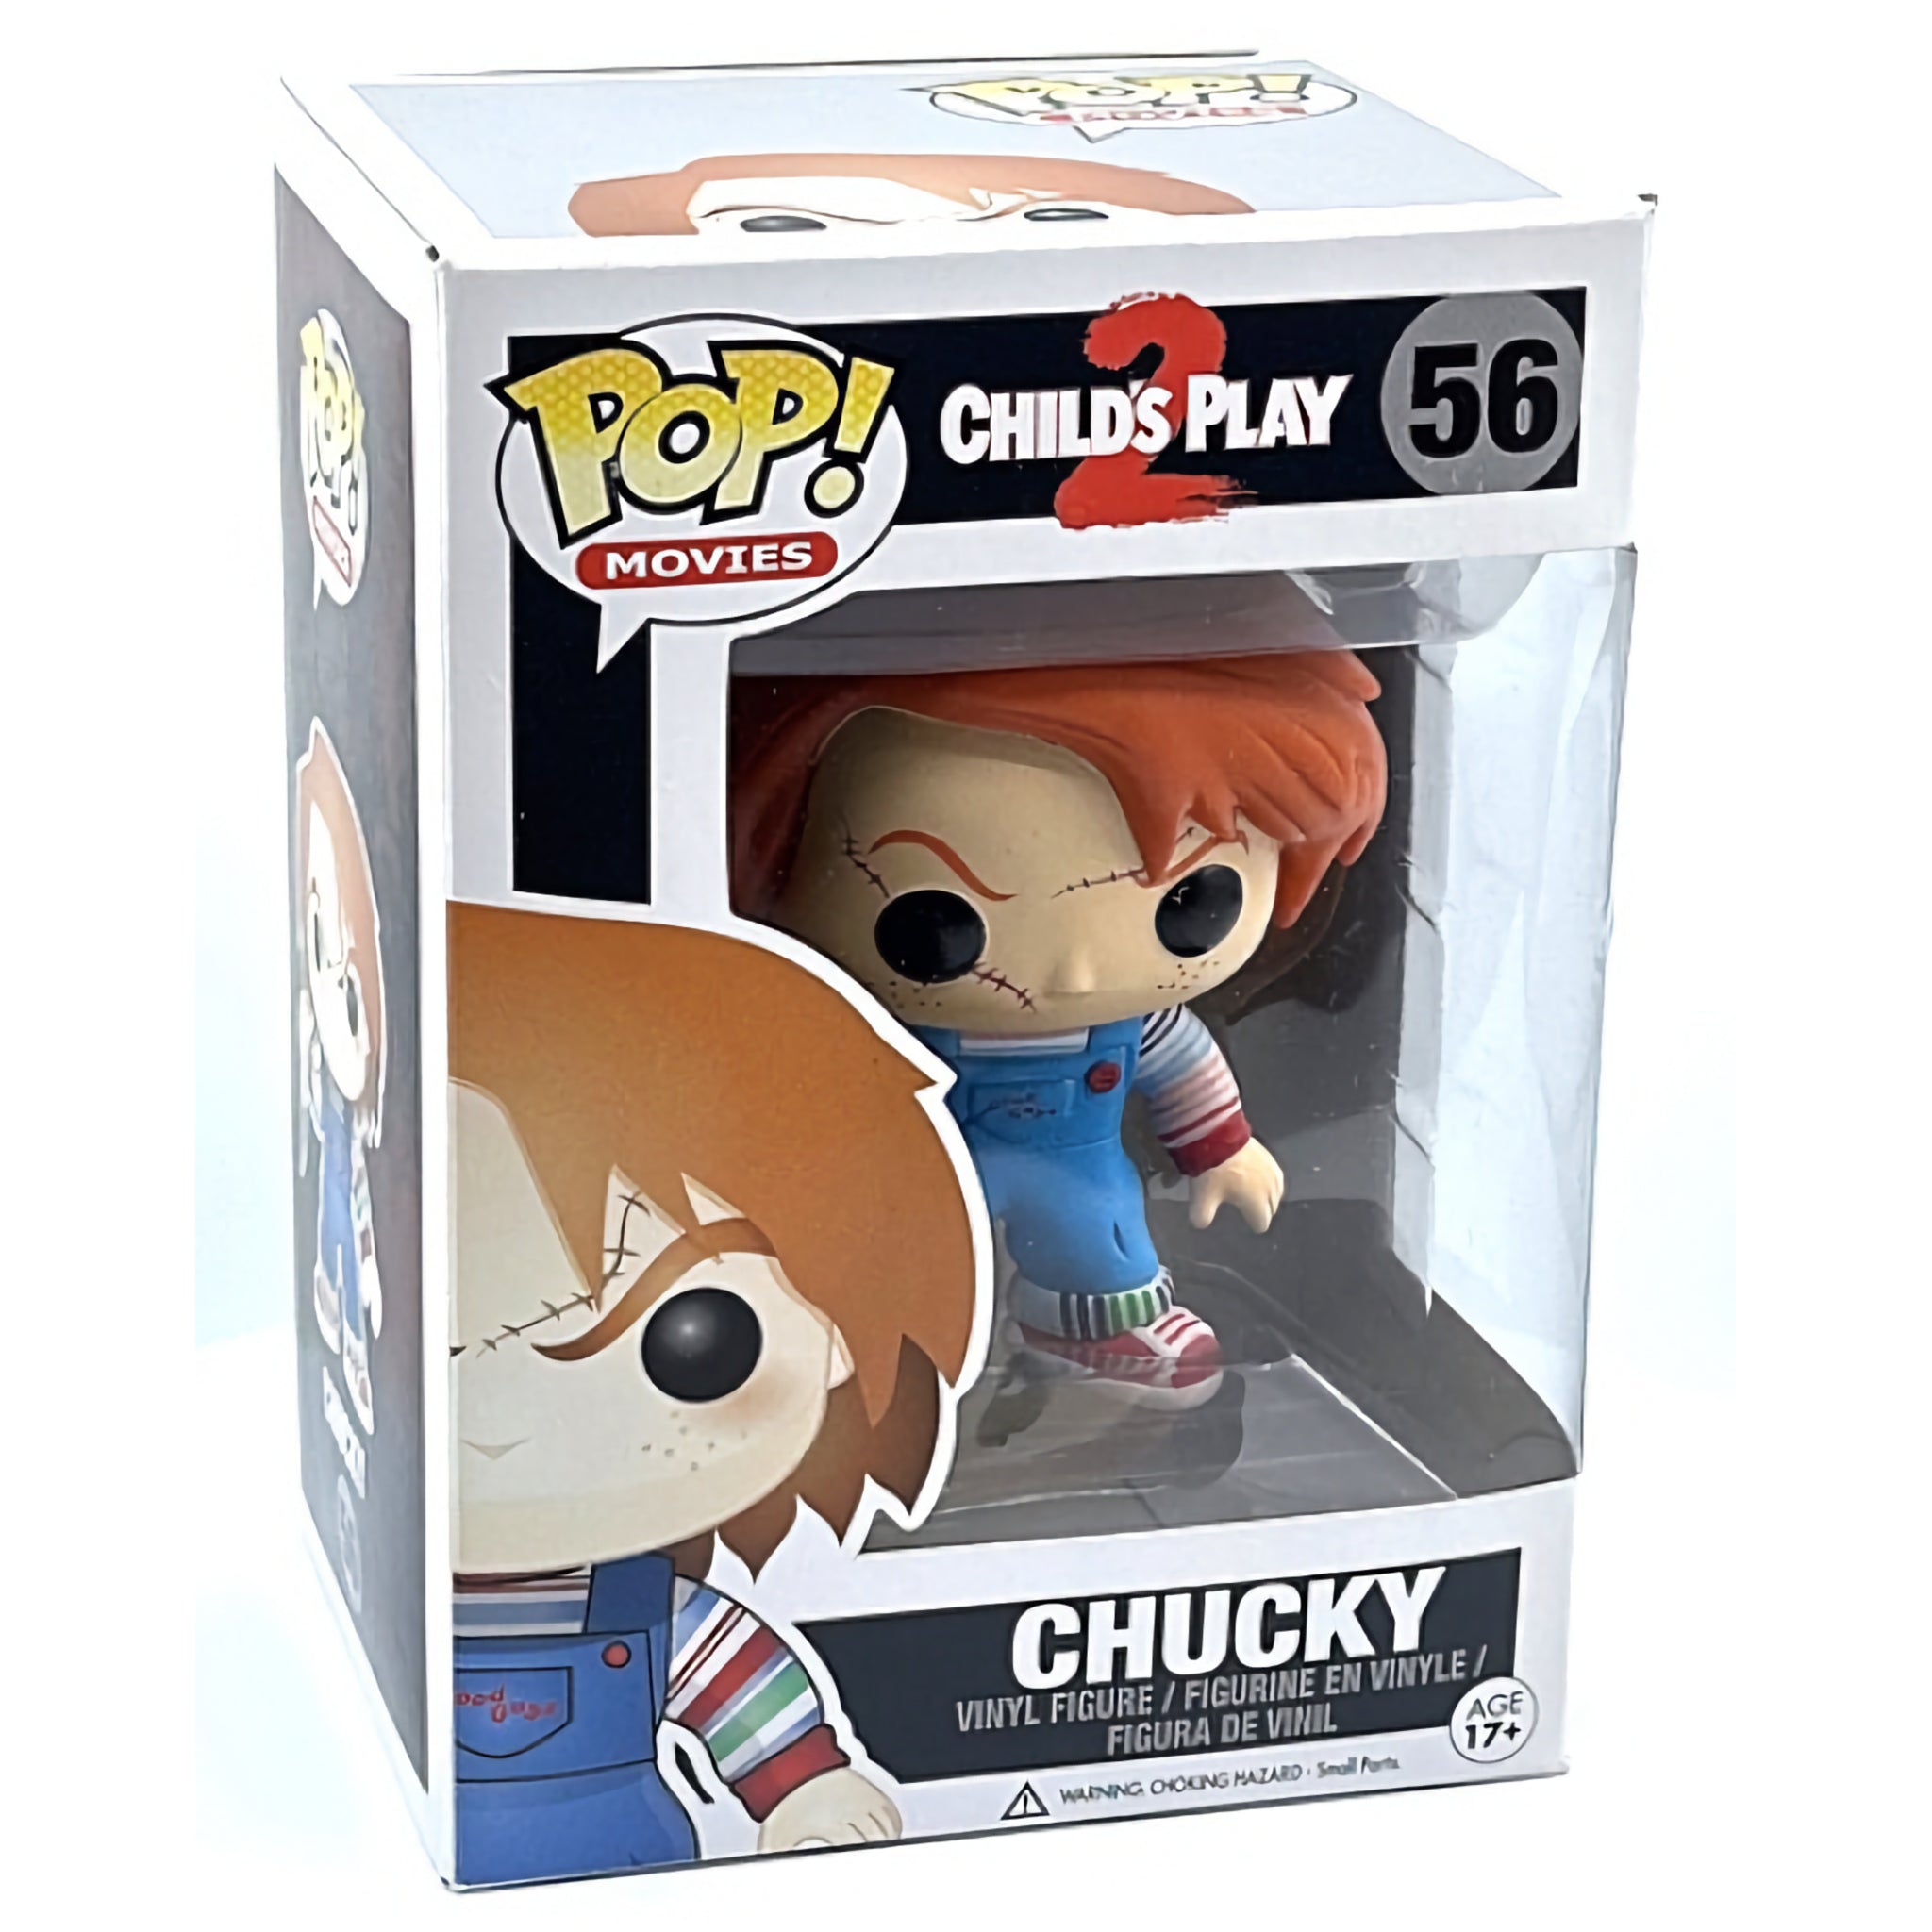 Chucky Funko Pop!